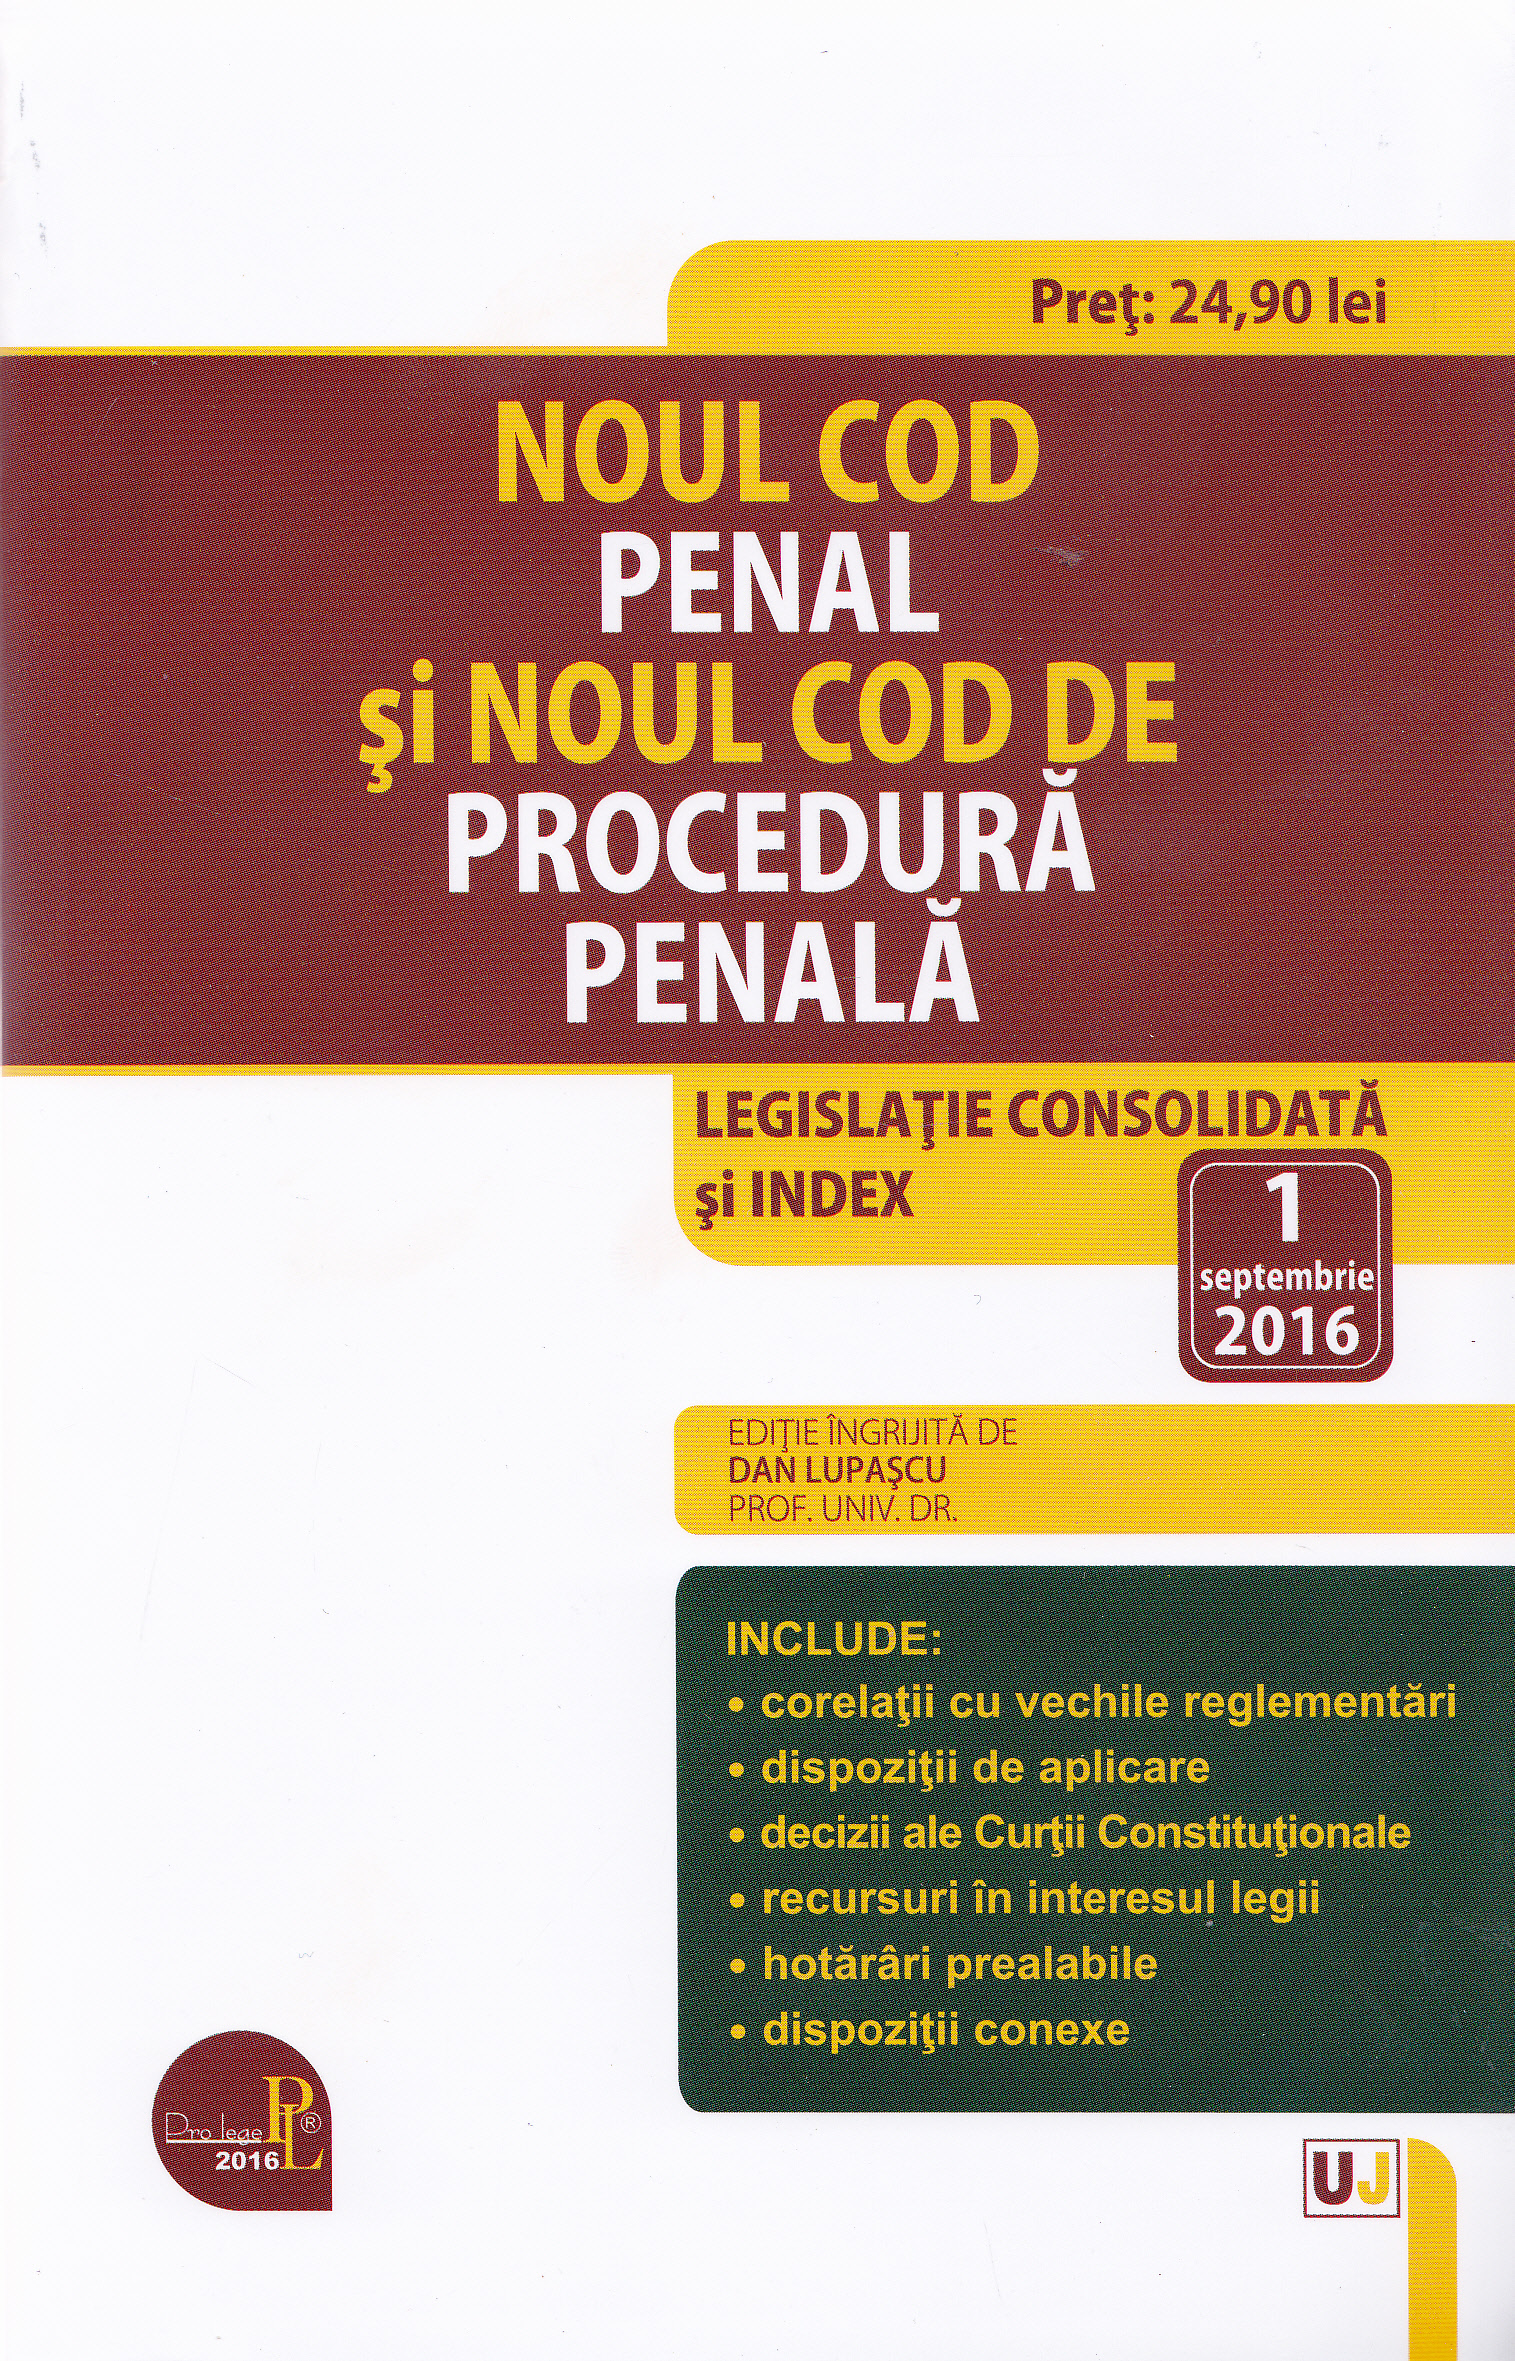 Noul Cod penal si Noul Cod de procedura penala act. 1 septembrie 2016